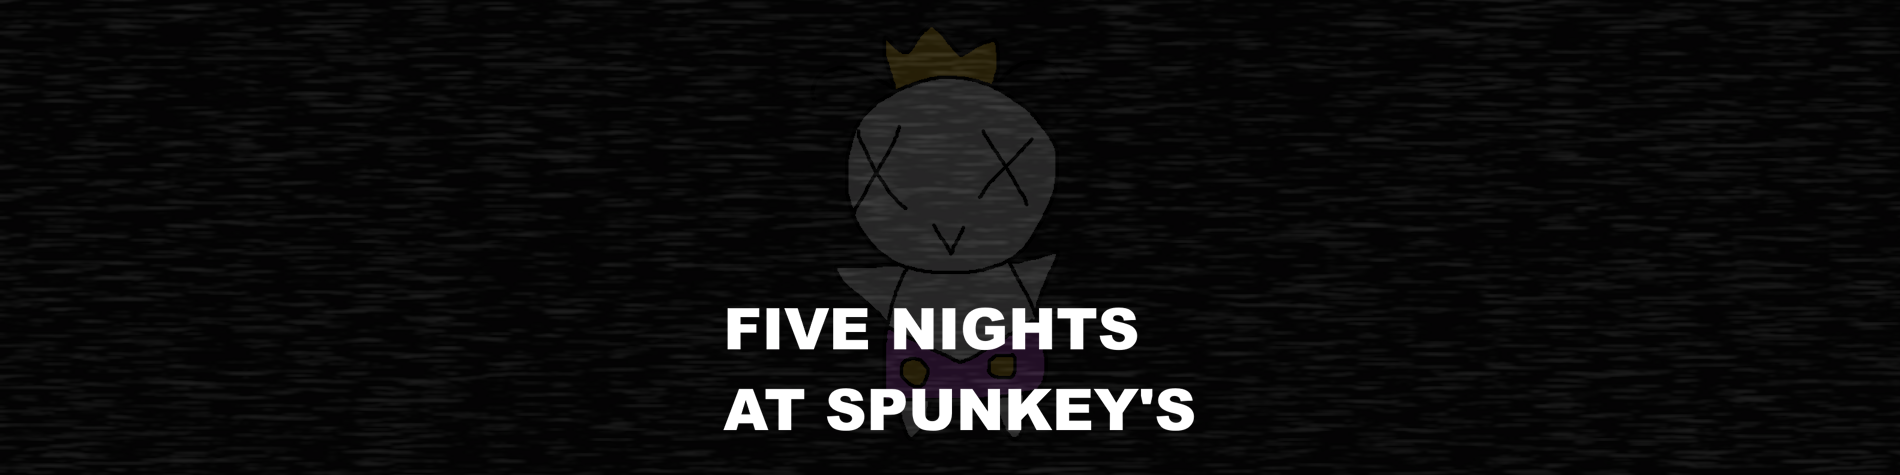 Five Nights at Spunkey's